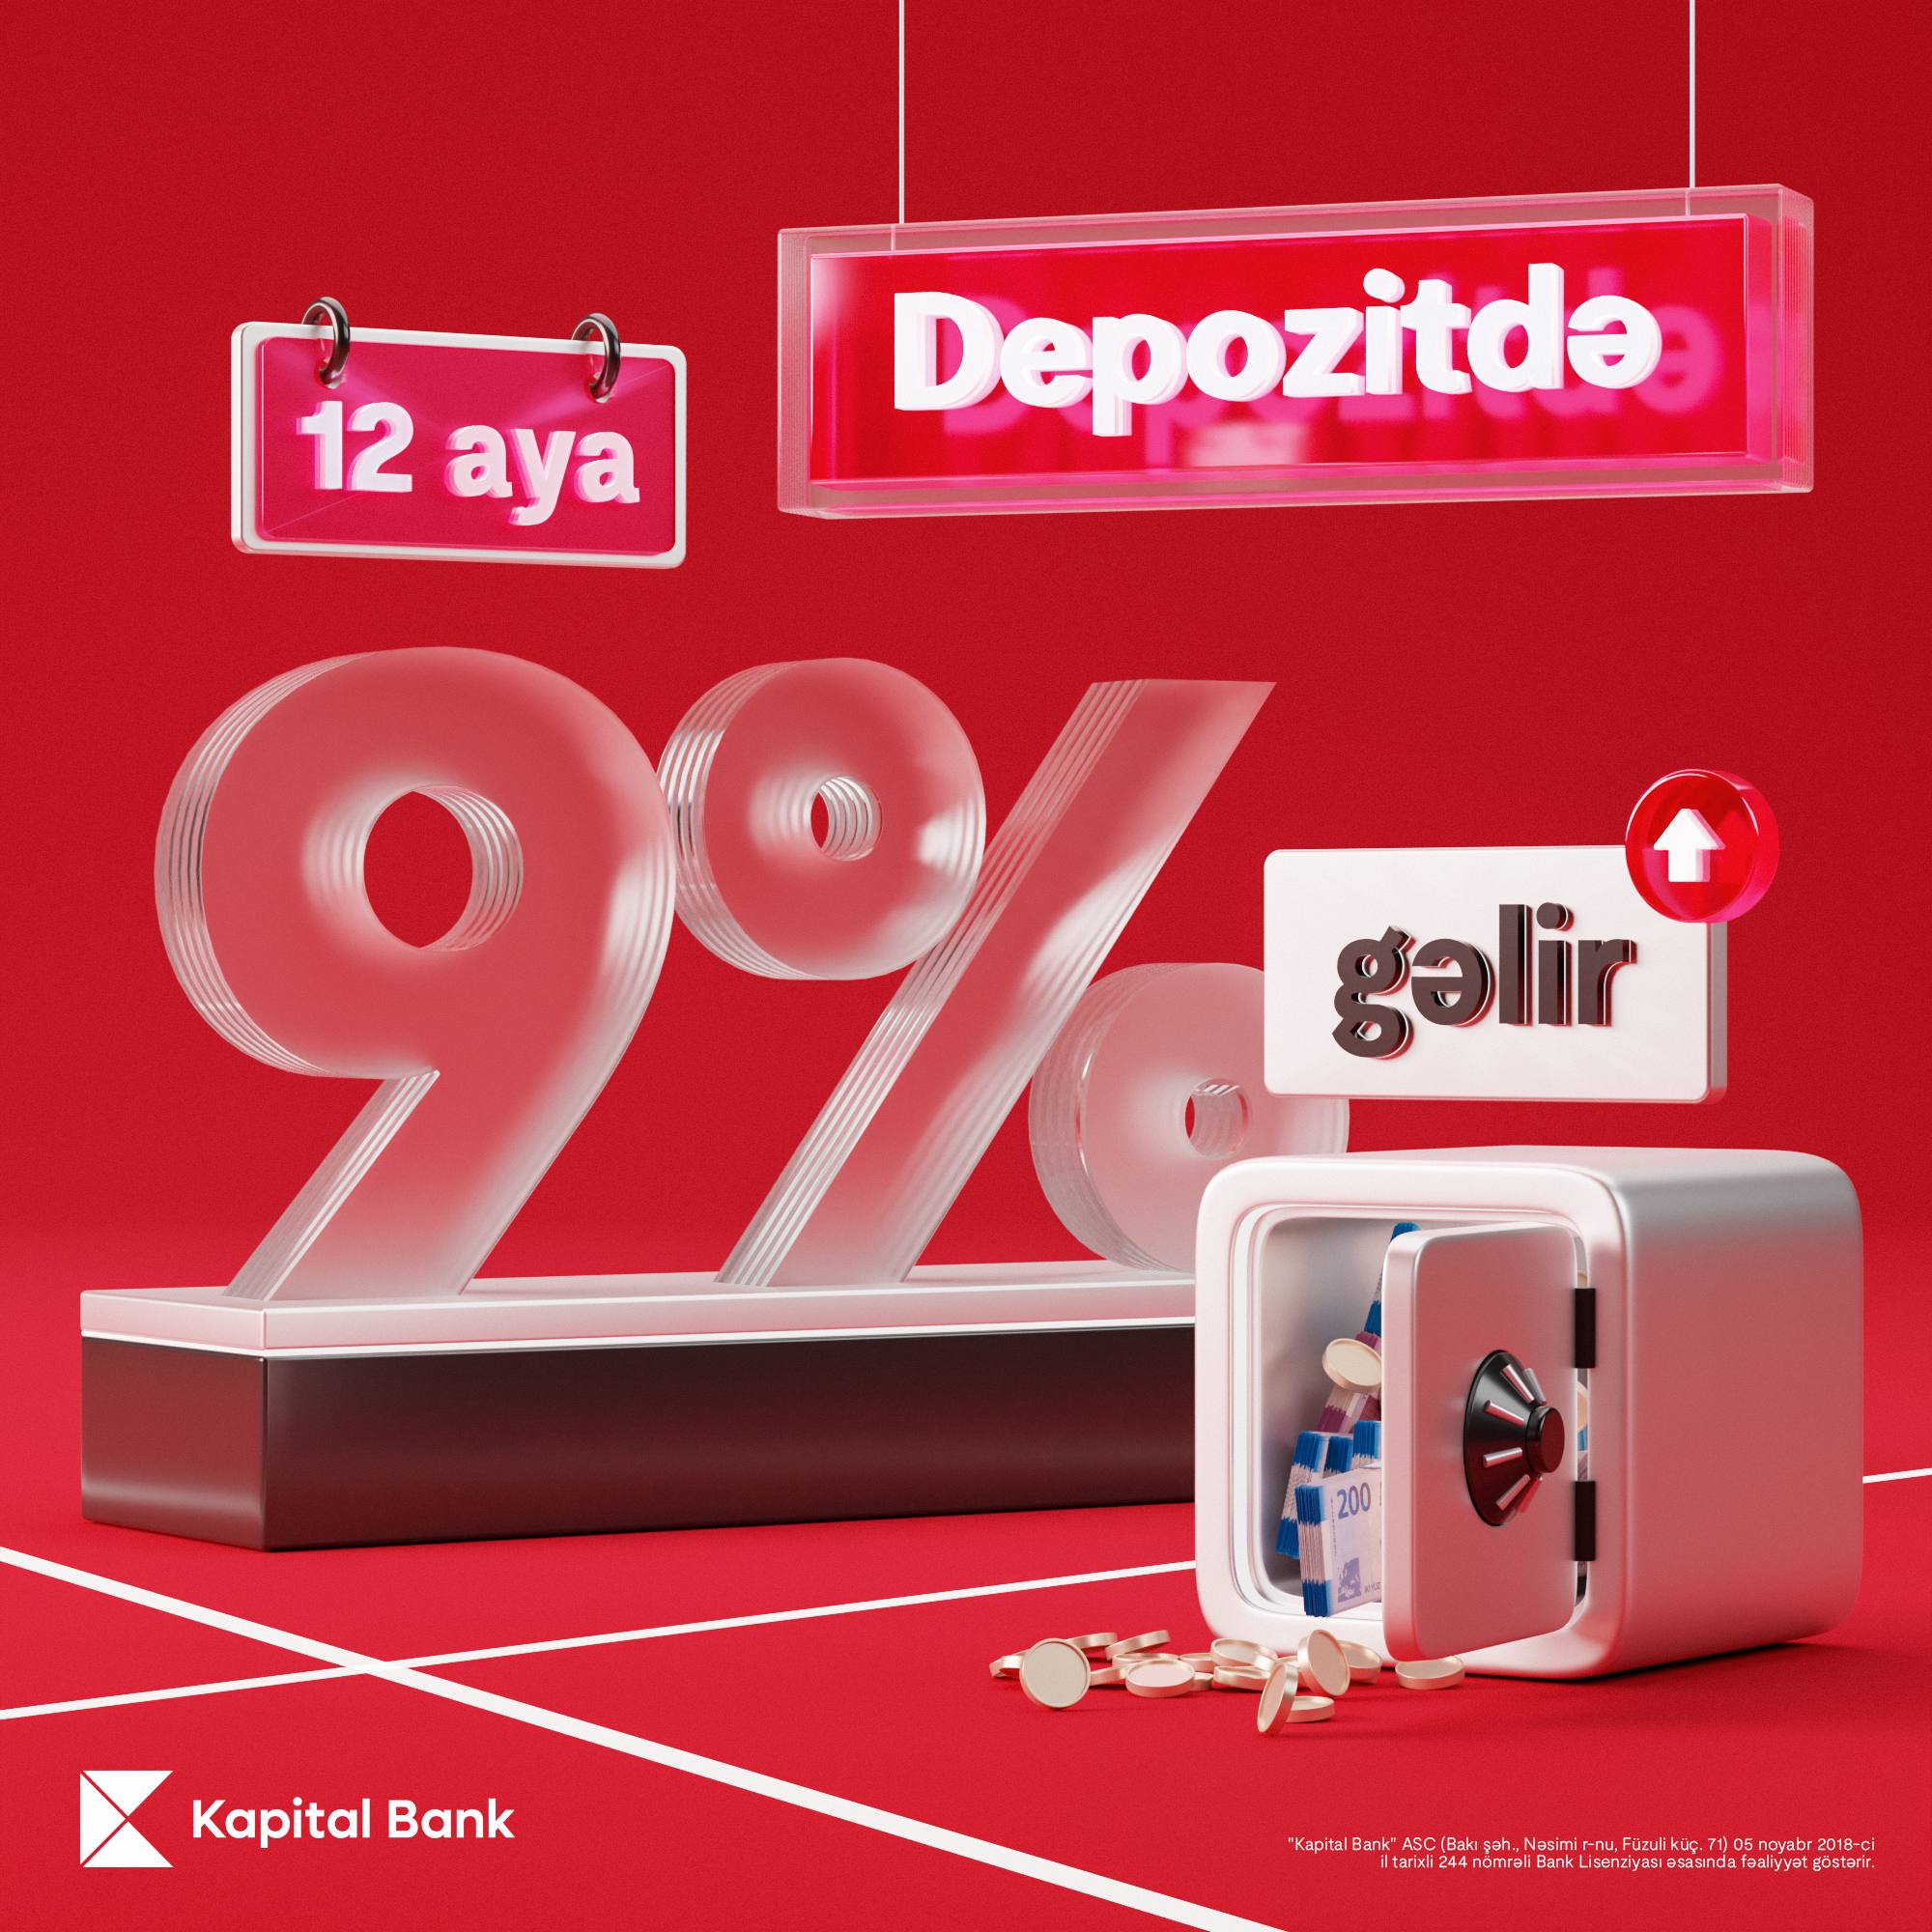 Kapital Bank has increased its deposit rate